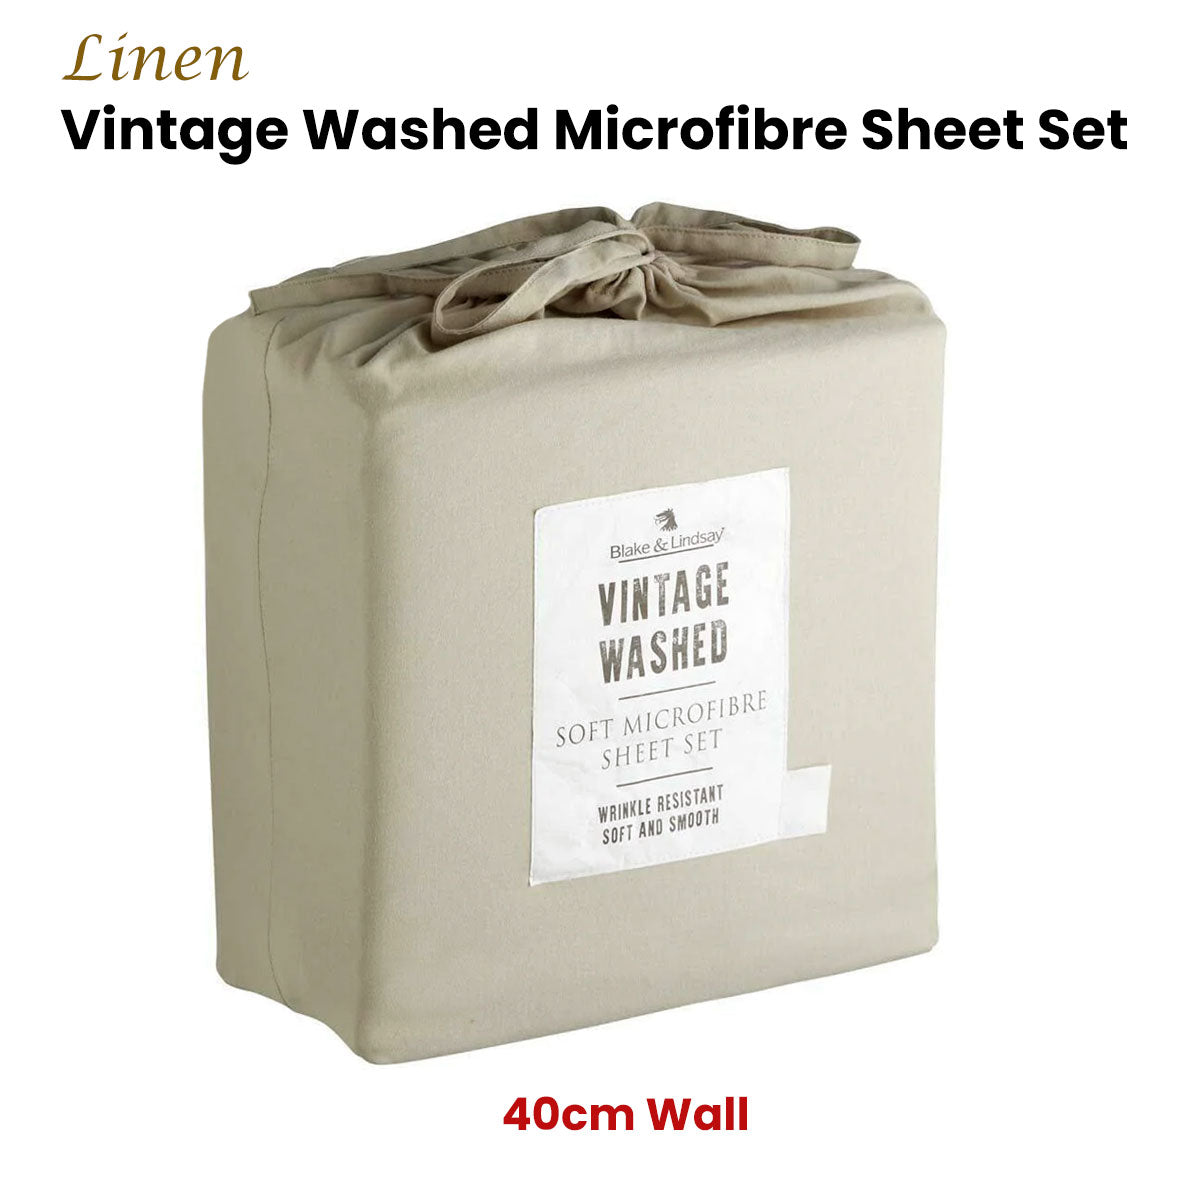 Blake & Lindsay Linen Vintage Washed Microfibre Sheet Set 40cm Wall King